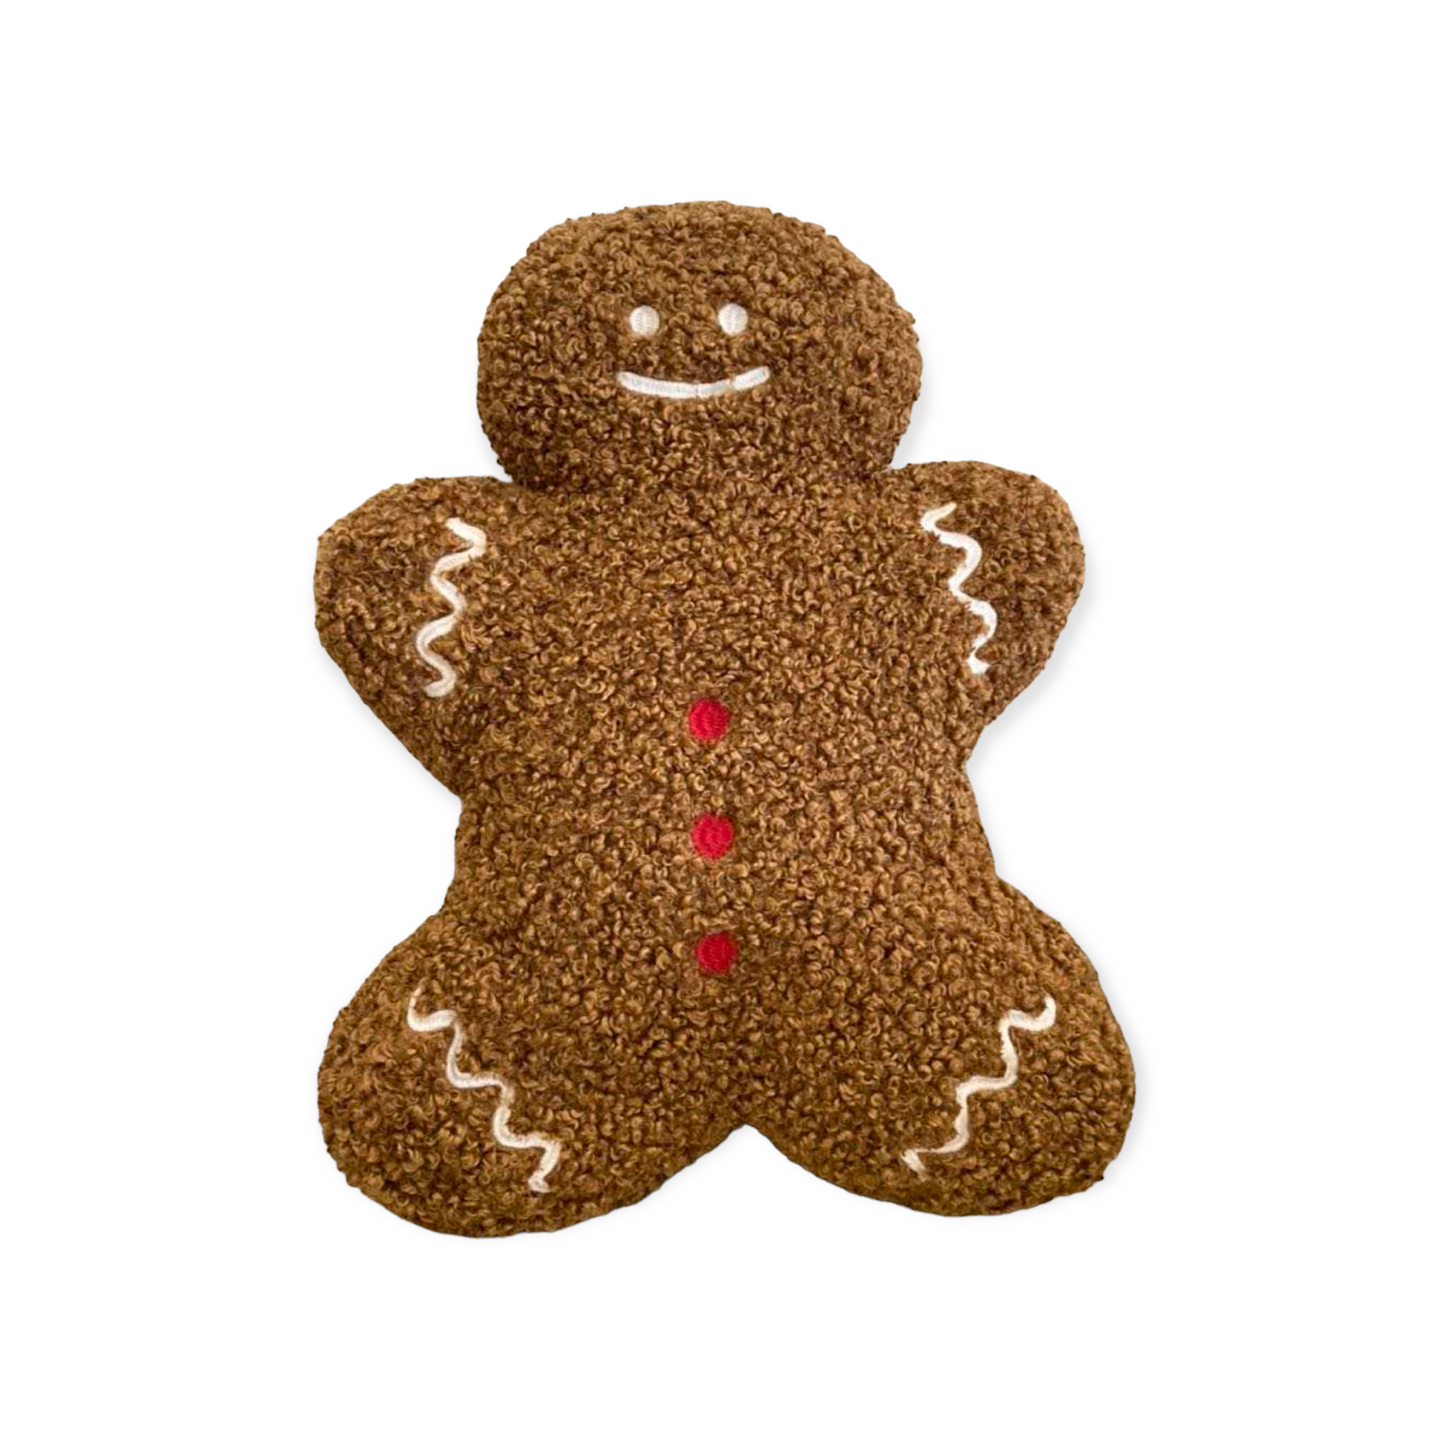 Mr Cool Guy Gingerbread Man